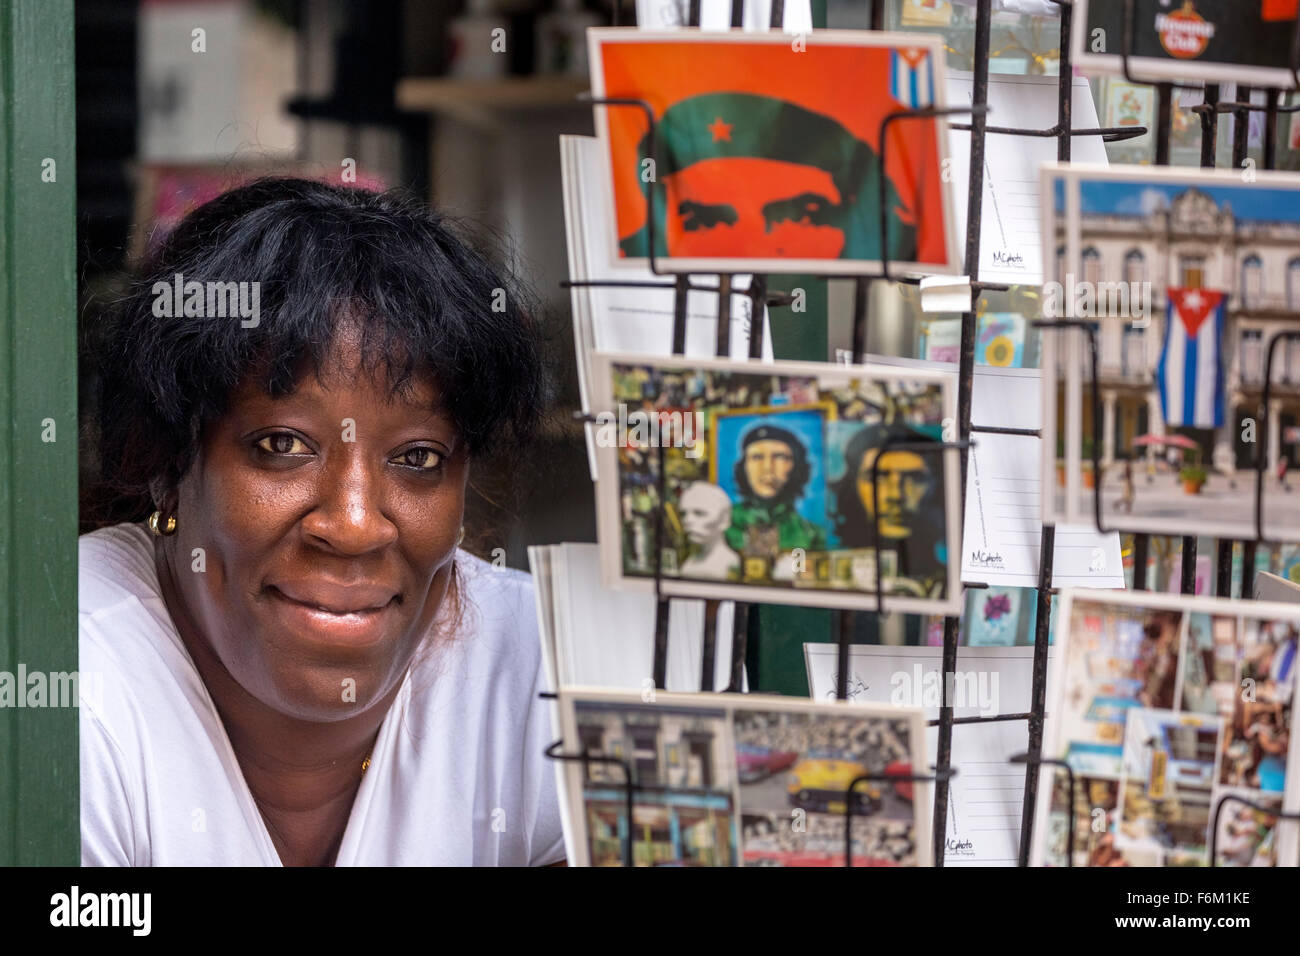 Kiosk saleswoman, Cuban, Postcard stands with postcards of Ernesto Che Guevara, souvenirs, memories, La Habana, Cuba, Caribbean, Stock Photo